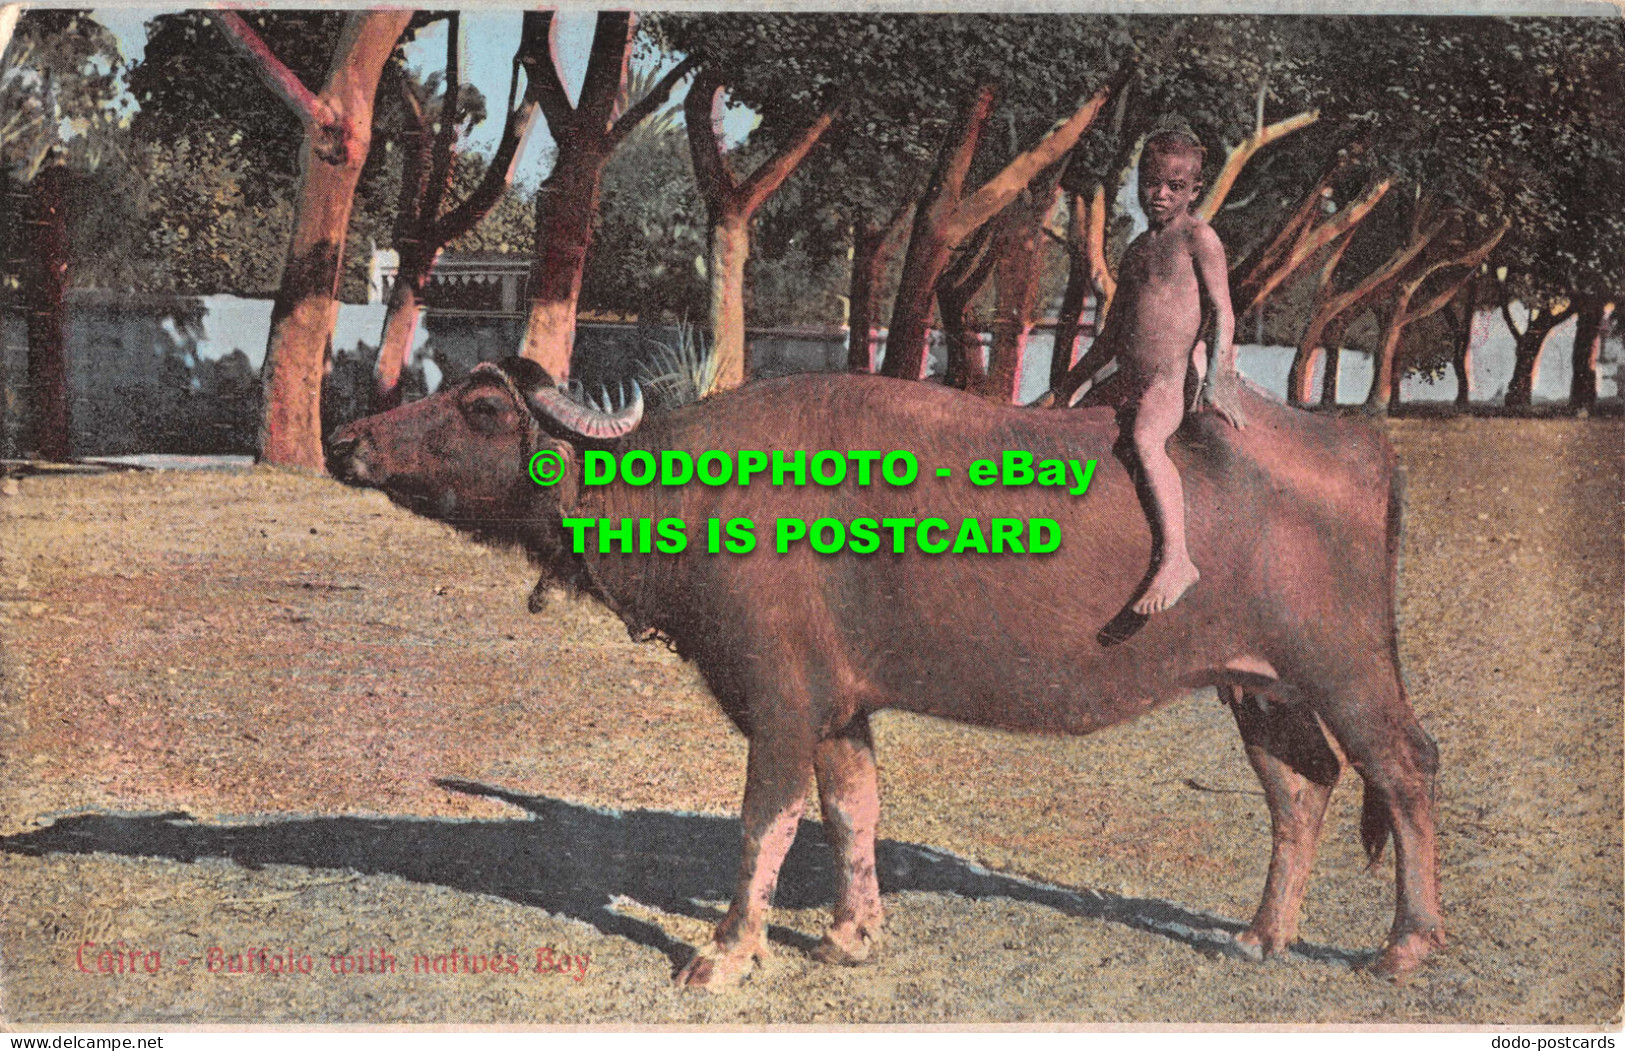 R551310 Cairo. Buffalo With Natives Boy. The Cairo Postcard Trust. Serie 582 - Welt